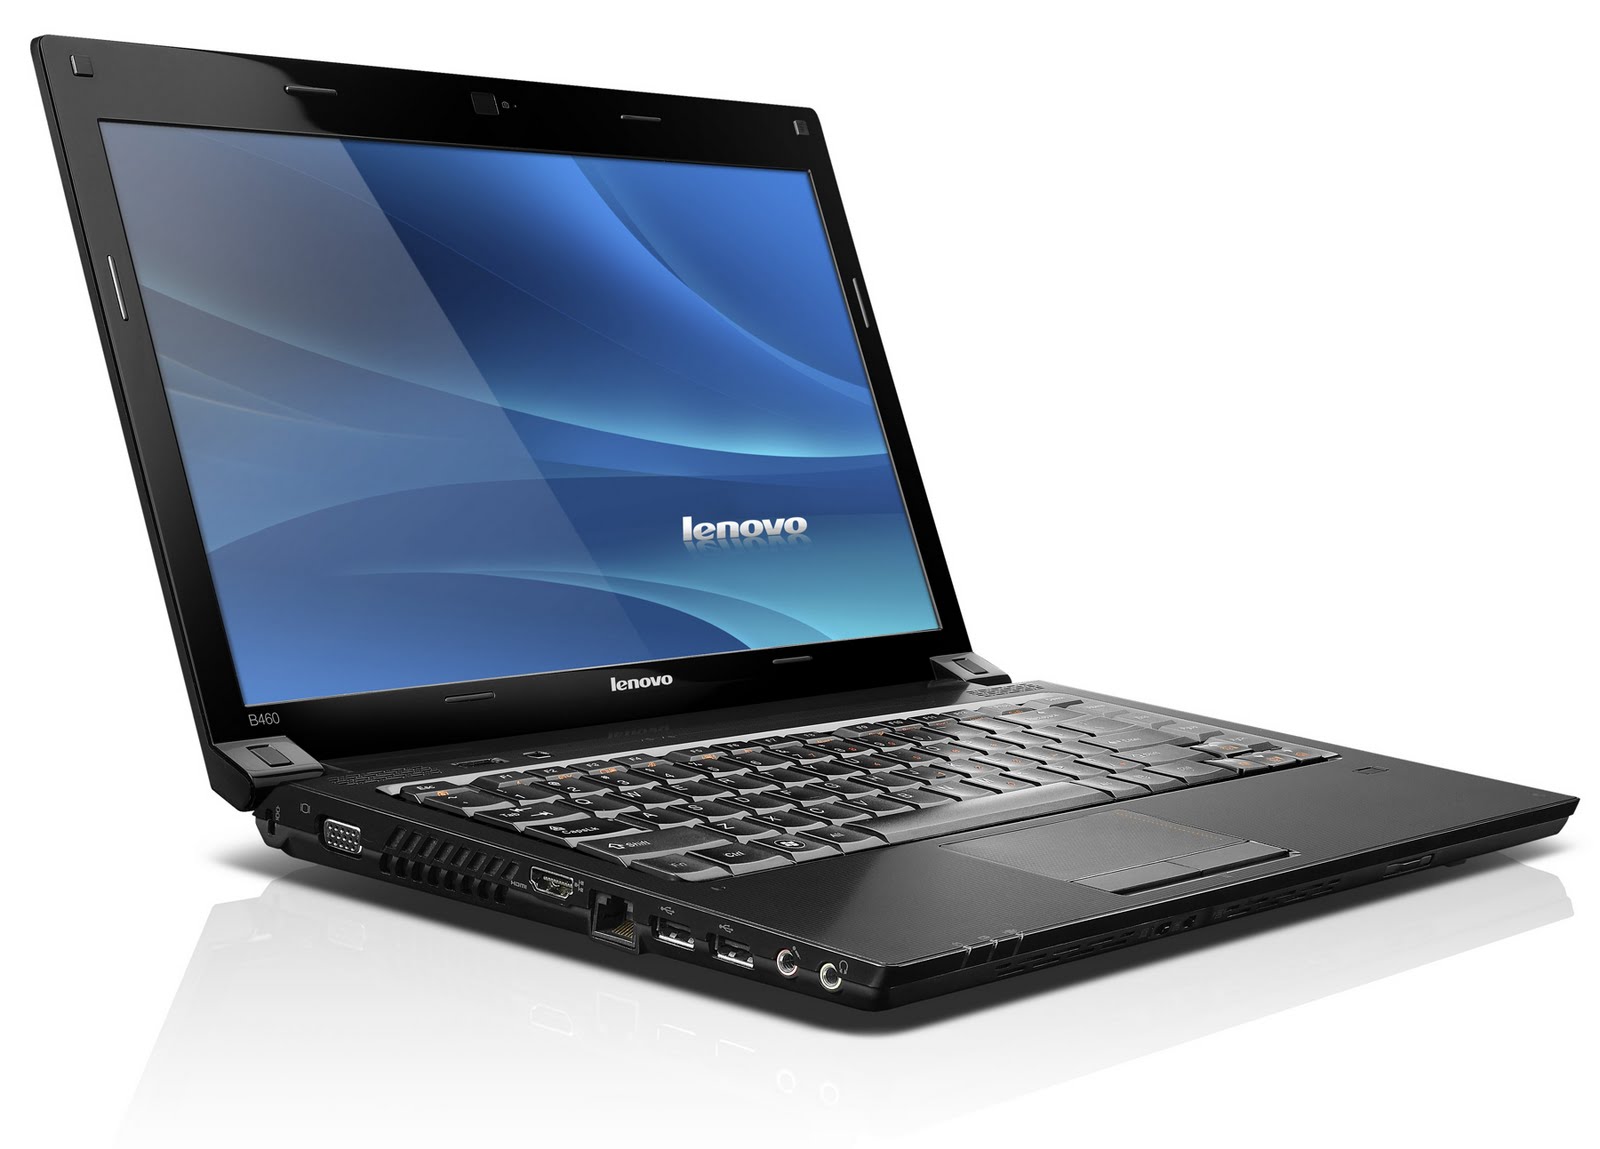 Specs Laptop Notebook Computer Lenovo IdeaPad B460 233 